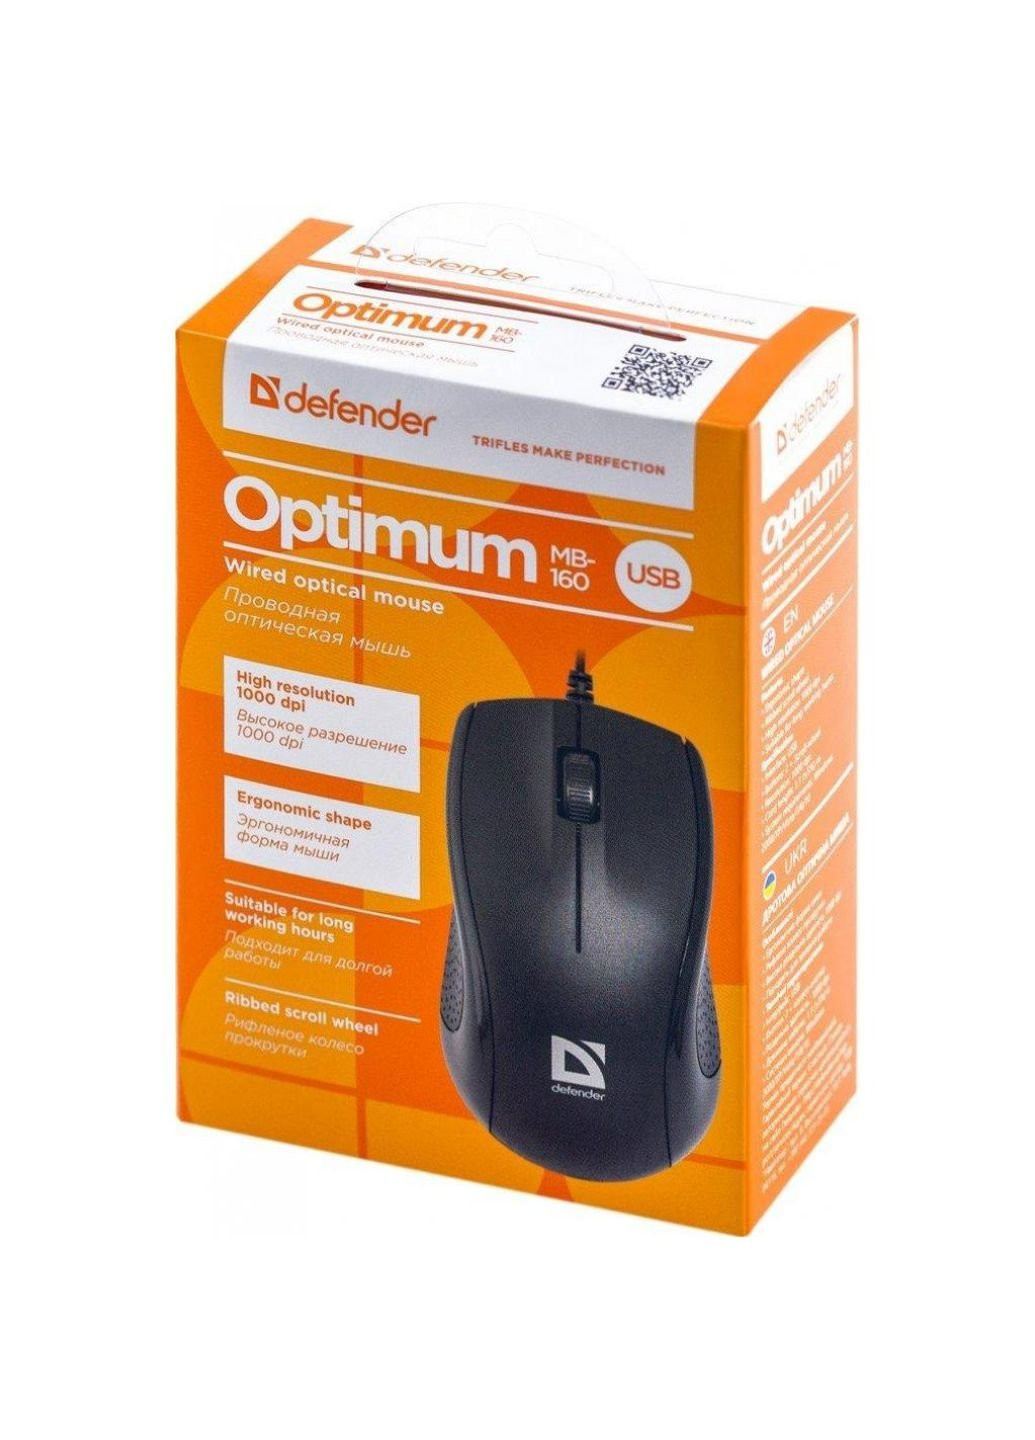 Мышка Optimum MB-160 Black USB (52160) Defender (252633238)